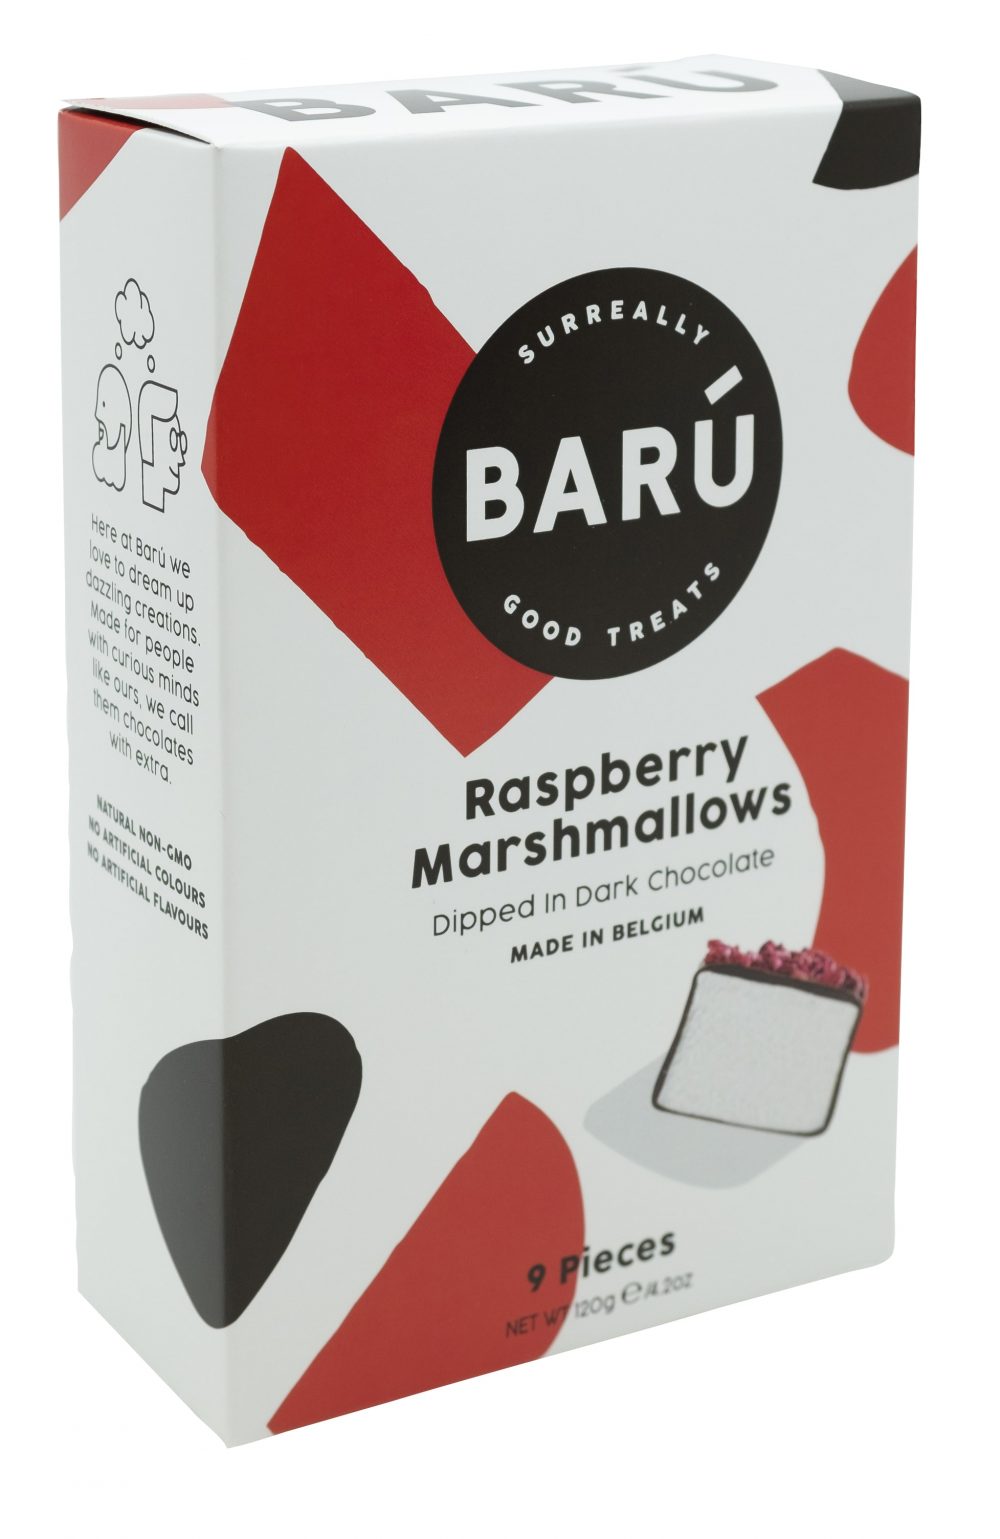 Barú 9-Piece Dark Chocolate Covered Marshmallows with Raspberry